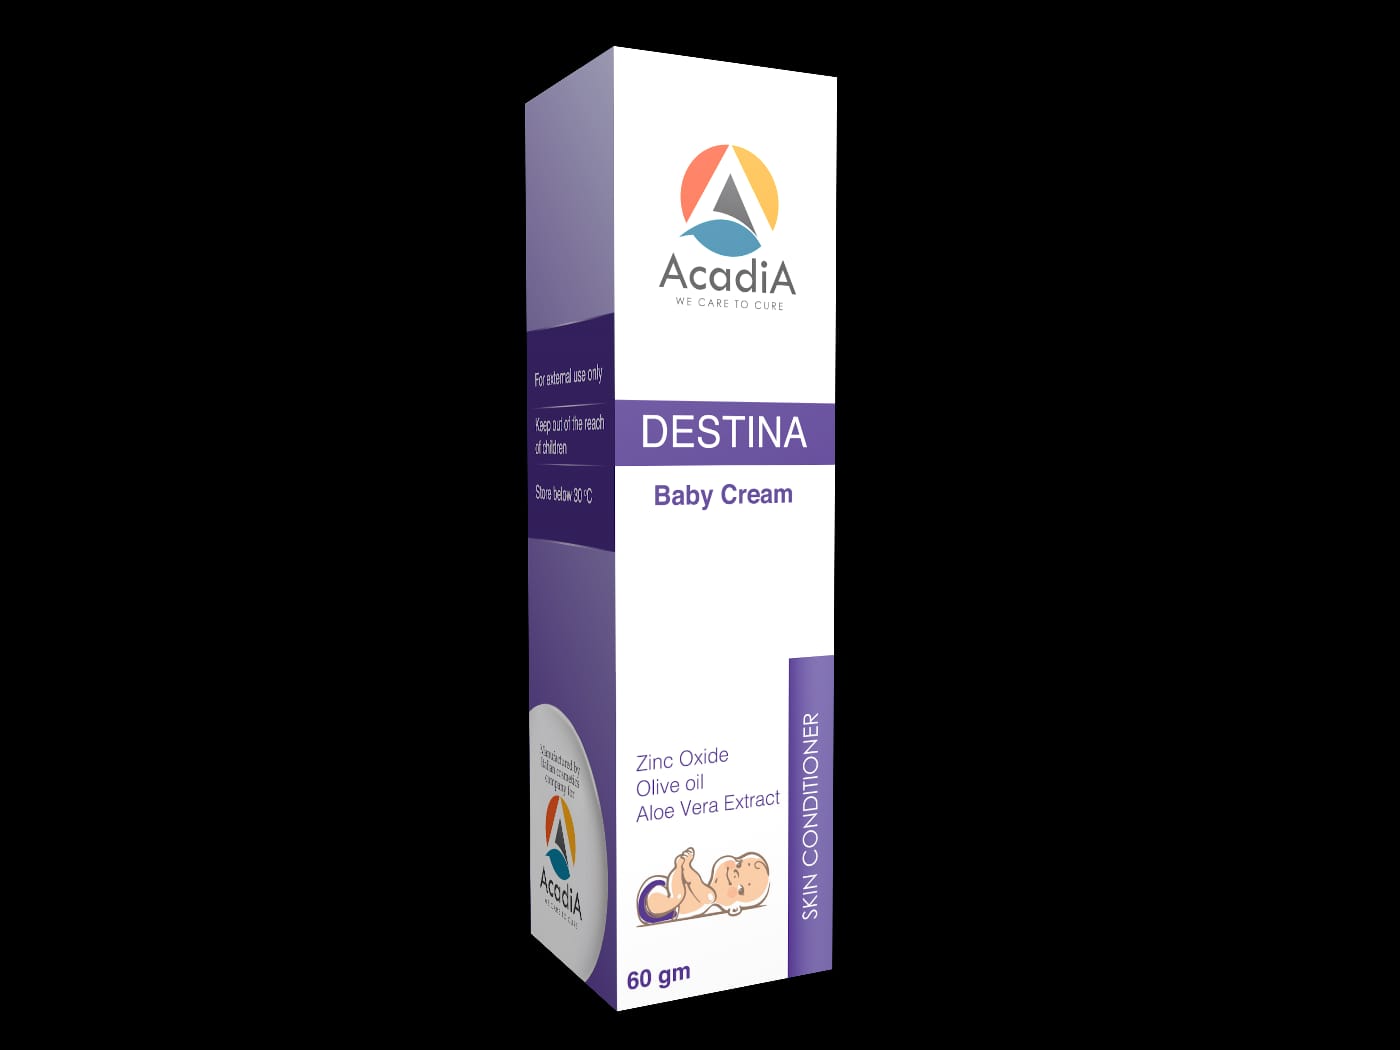 ACADIA DESTINA 60 GM BABY CREAM لعلاج التهاب الحفاضات عند الأطفال